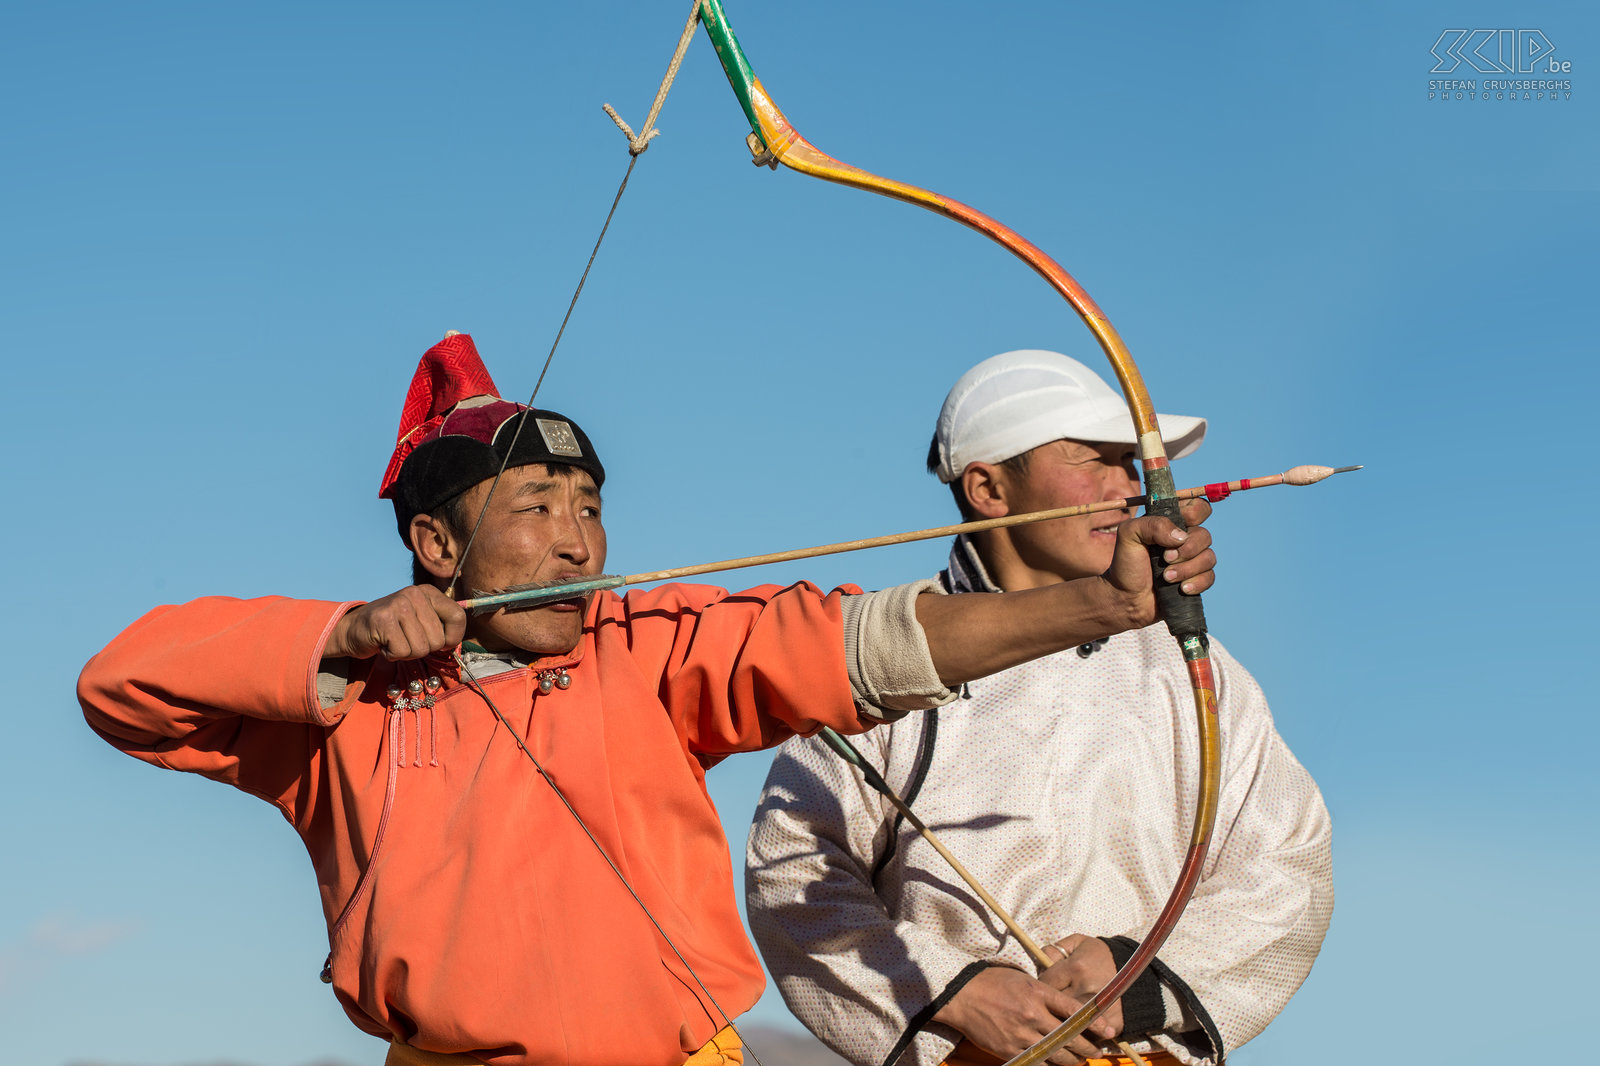 Ulgii - Golden Eagle Festival - Archers An archer Uriankhai aims his bow and arrow on the target Stefan Cruysberghs